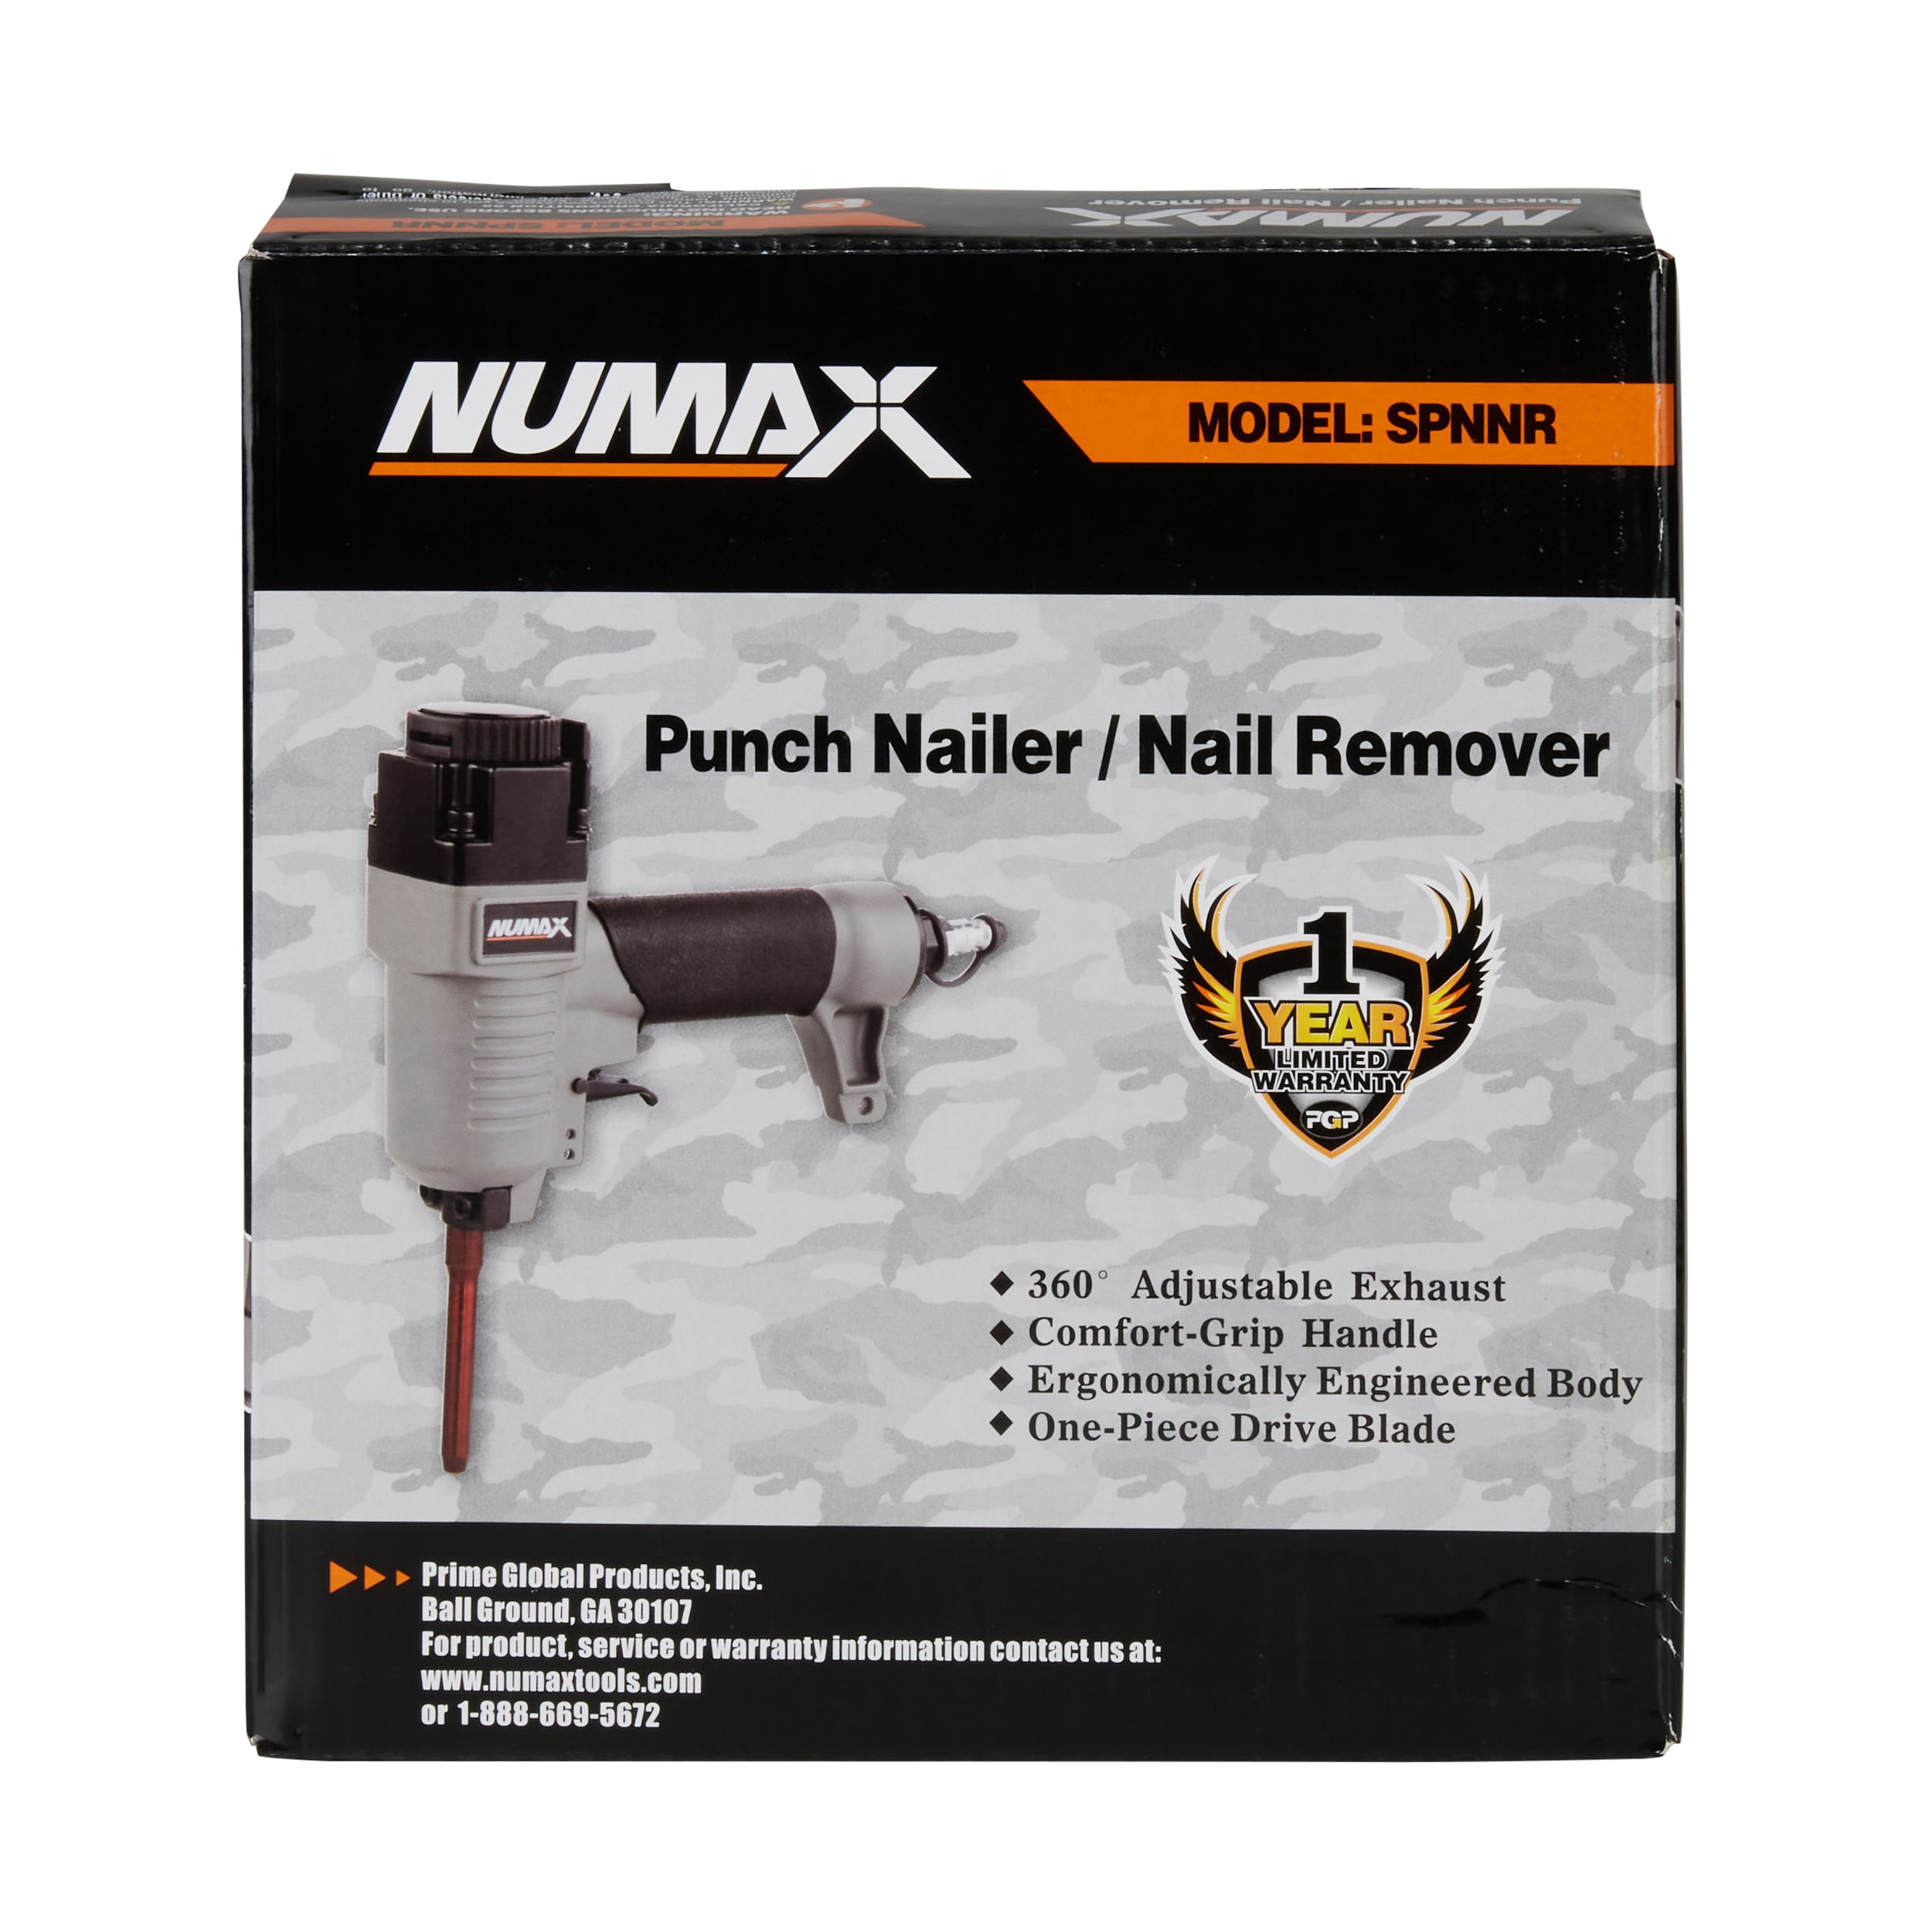 Heavy Duty Pneumatic Professional Punch Nailer / Nail Remover 1/4 Inch NPT  AP700 | eBay